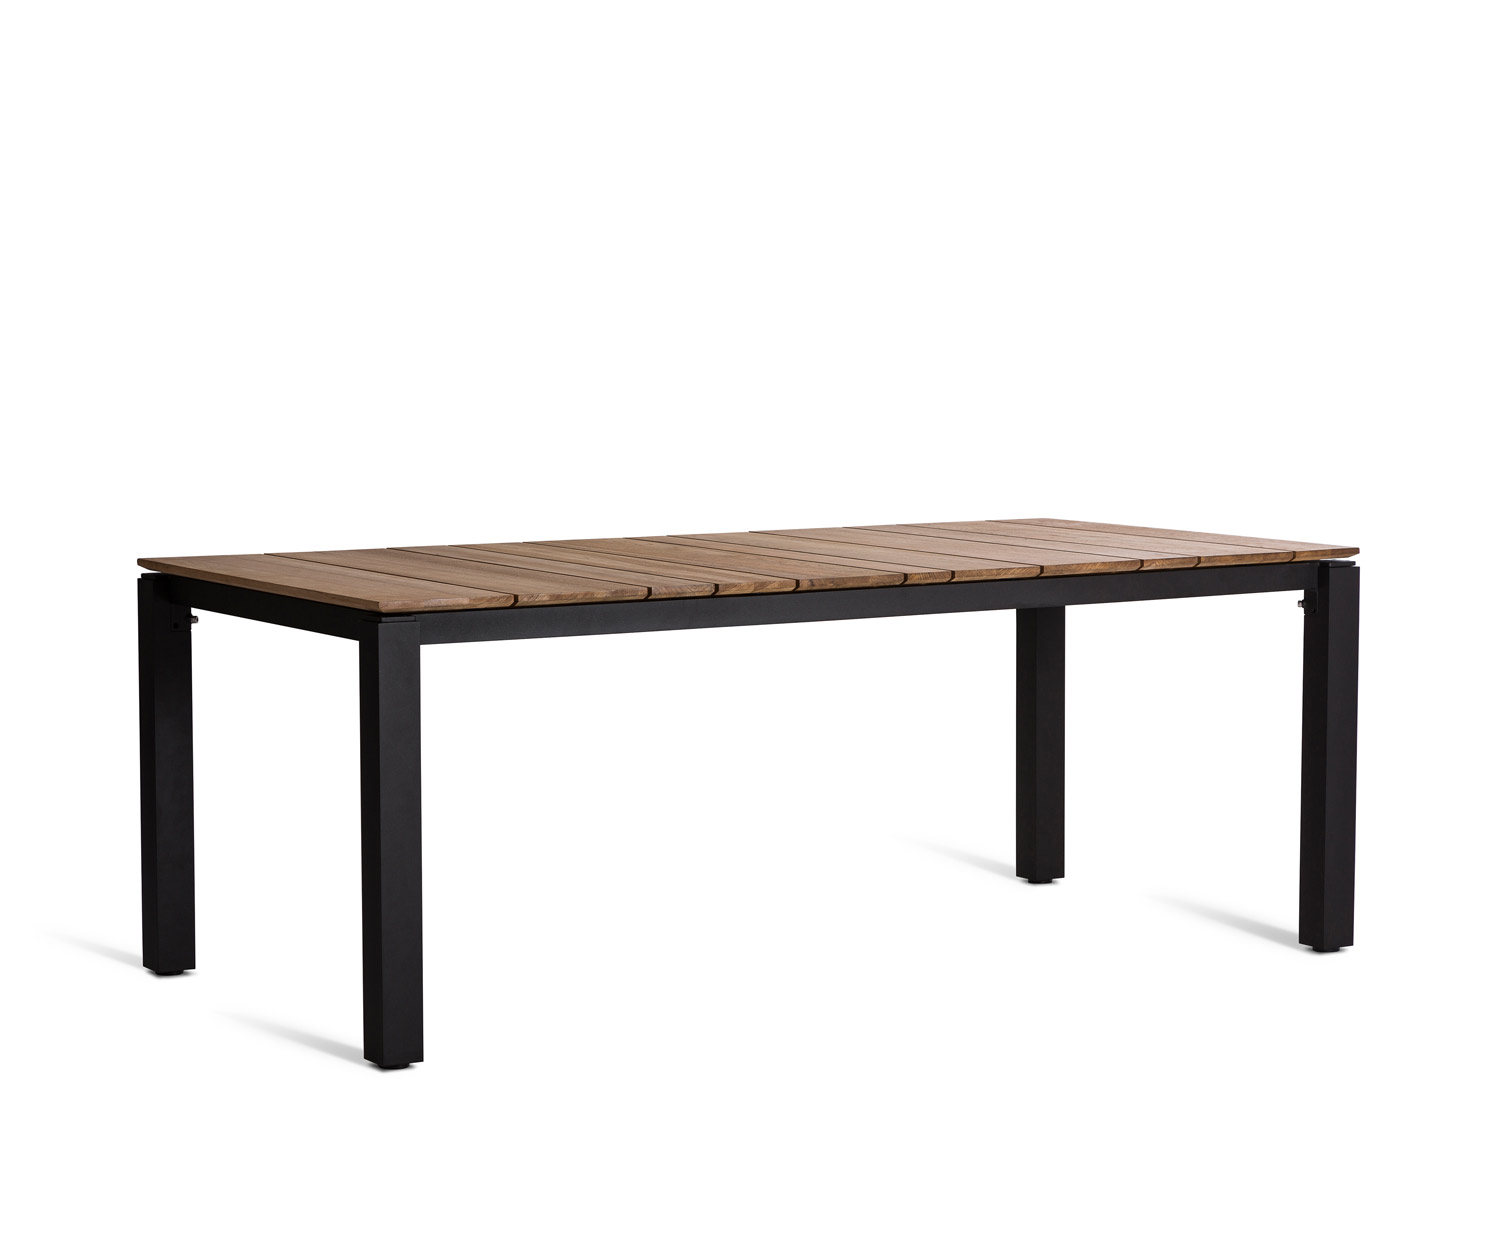 Exclusive Oasiq Machar design garden table with teak table top